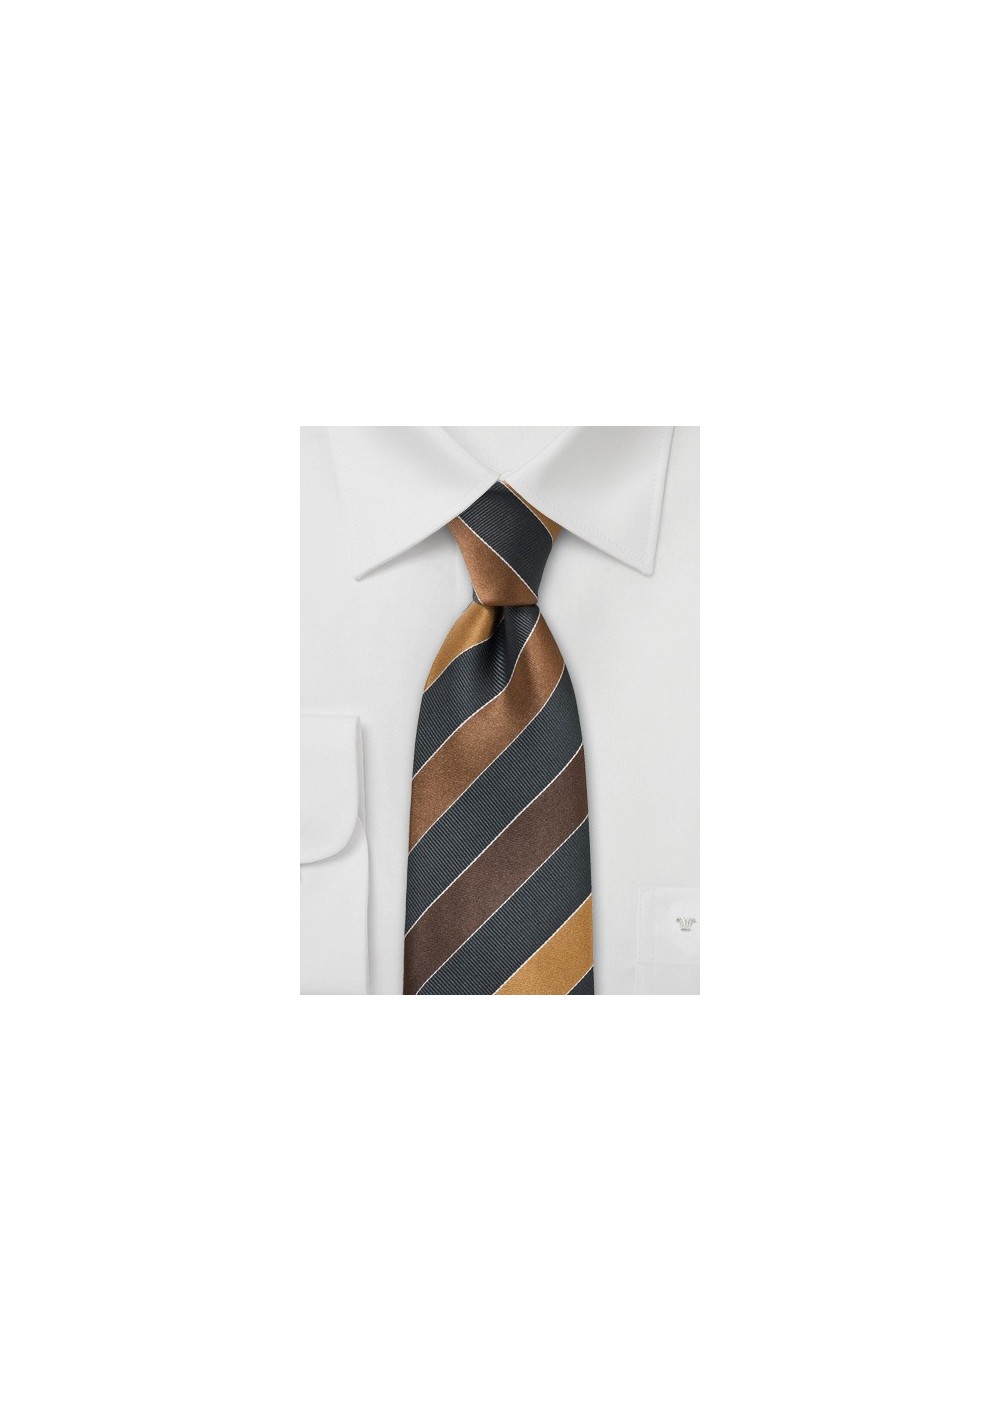 Striped Tie in Bronze, Brown, Gray